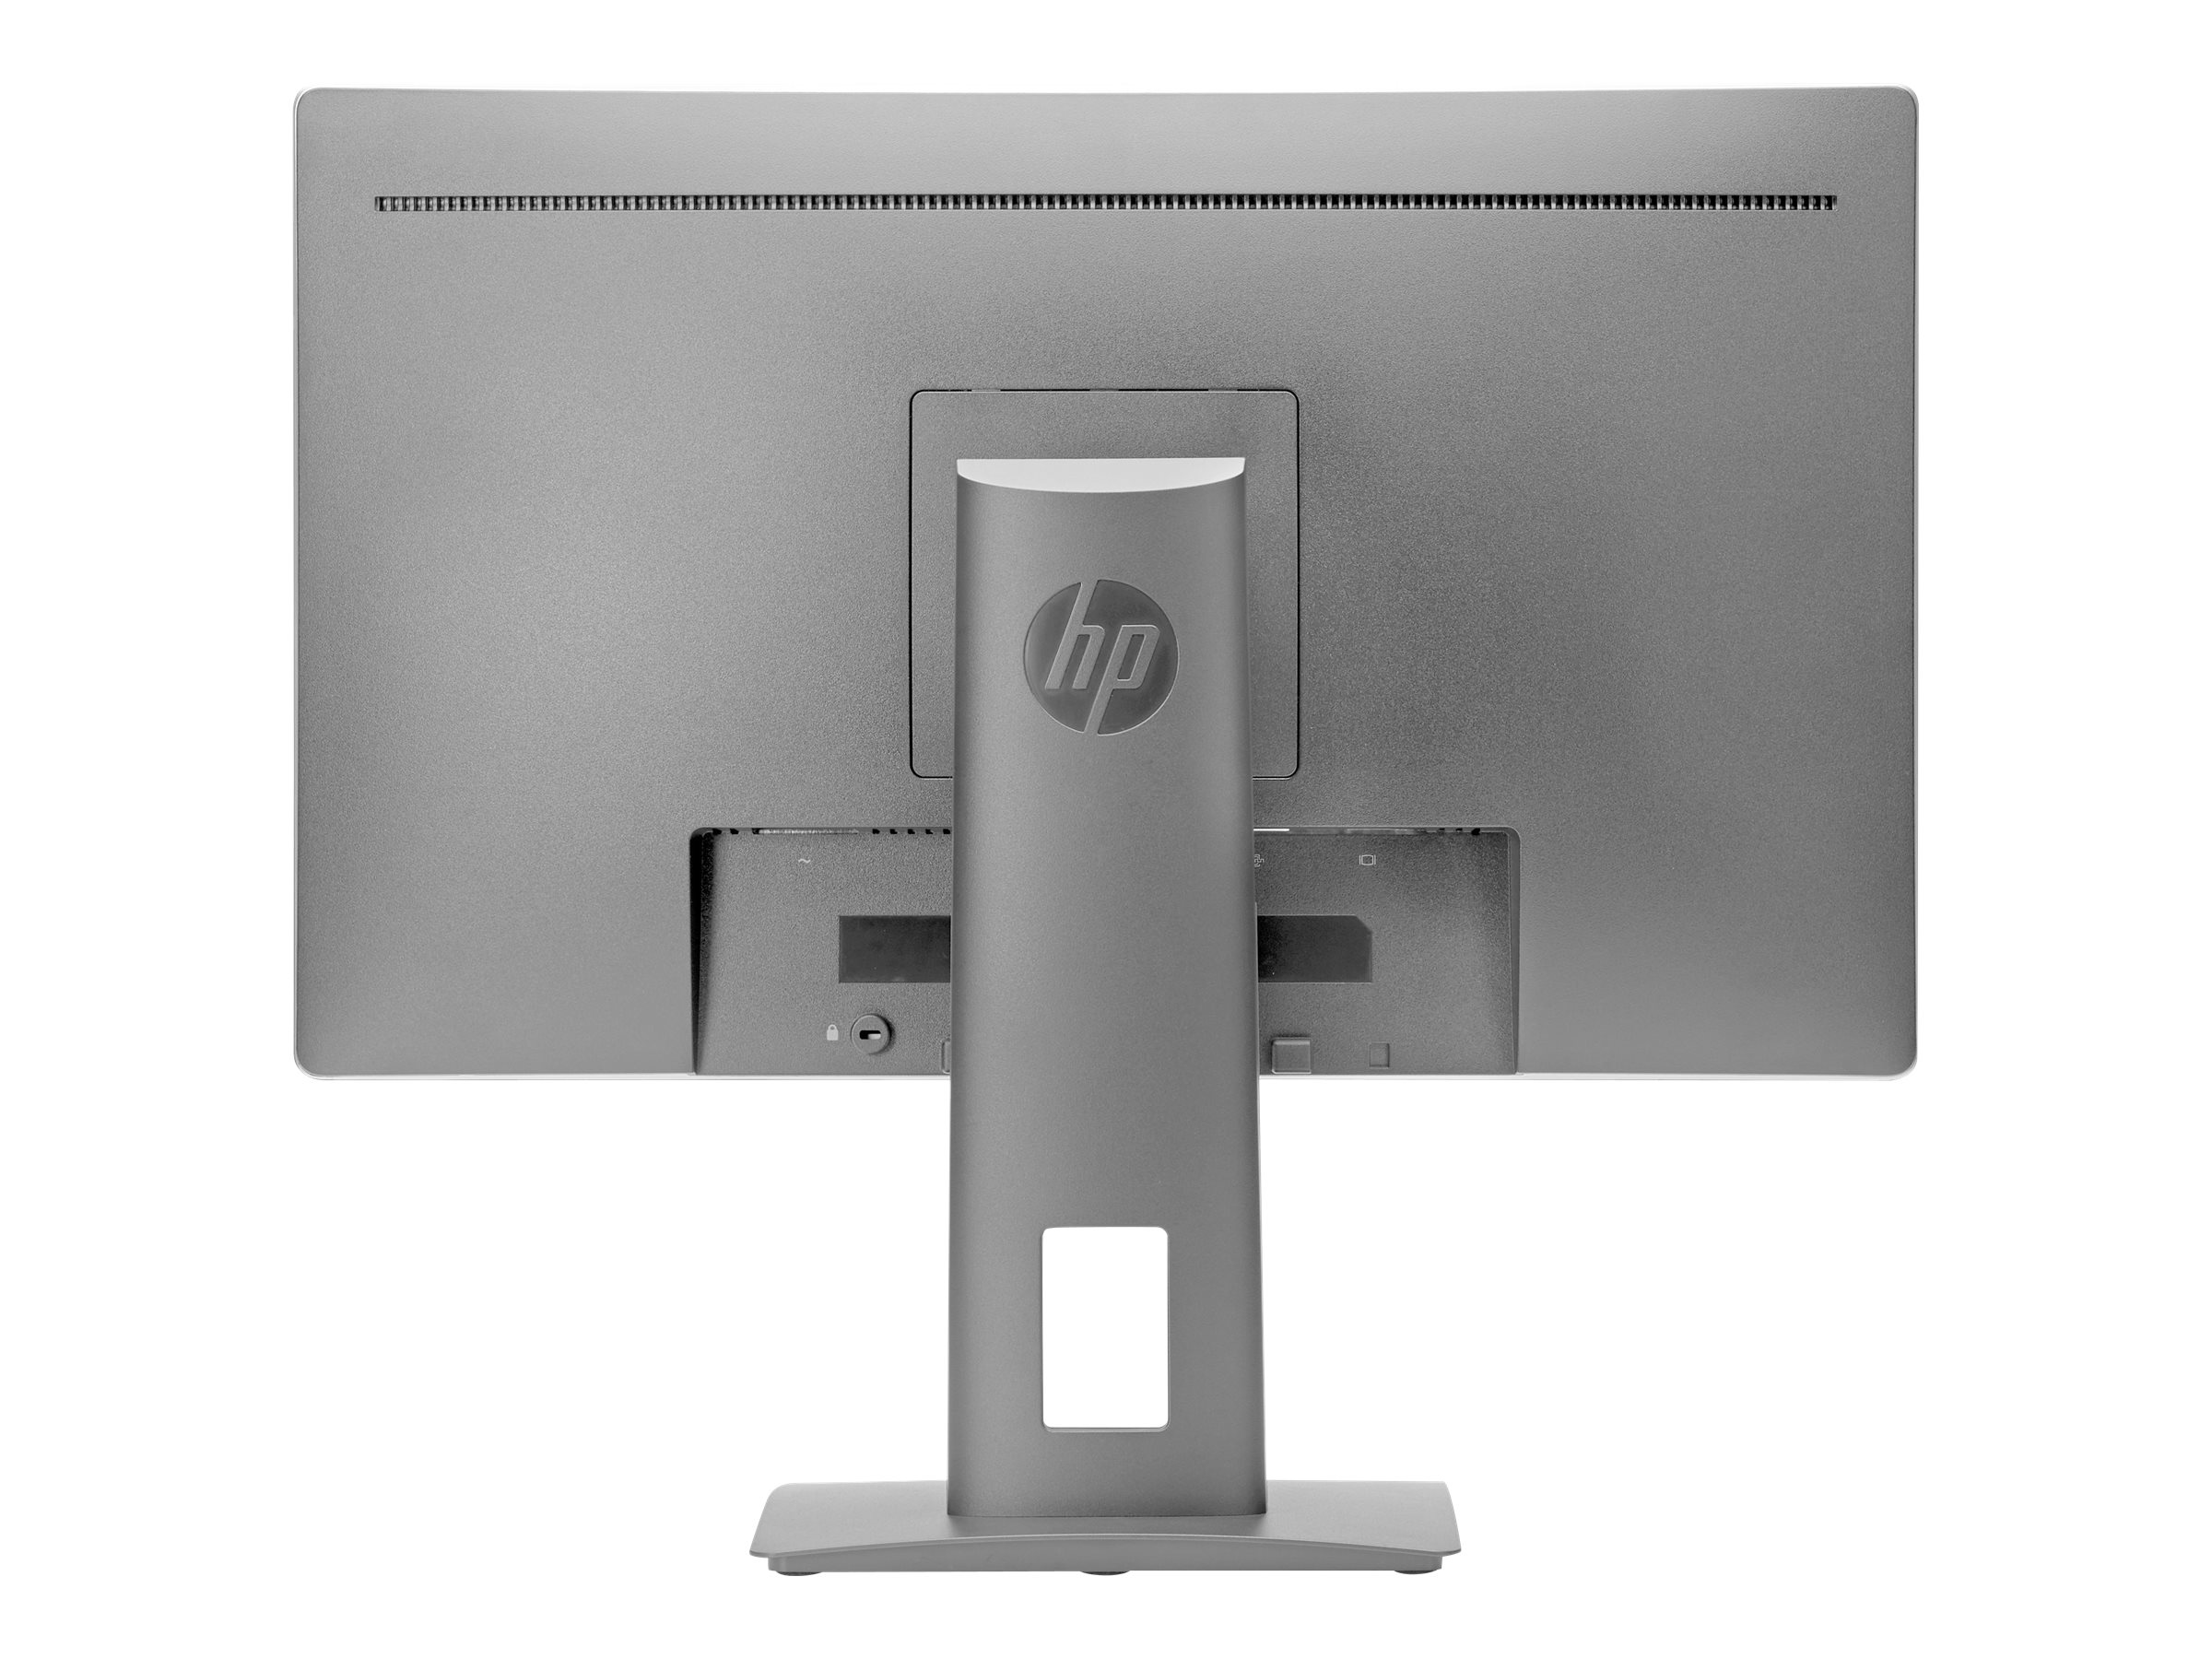 HP vh24 - LED monitor - 23.8" (23.8" viewable) - 1920 x 1080 Full HD (1080p) - IPS - 250 cd/m - 1000:1 - 5 ms - DVI-D, VGA, DisplayPort - black - image 4 of 4